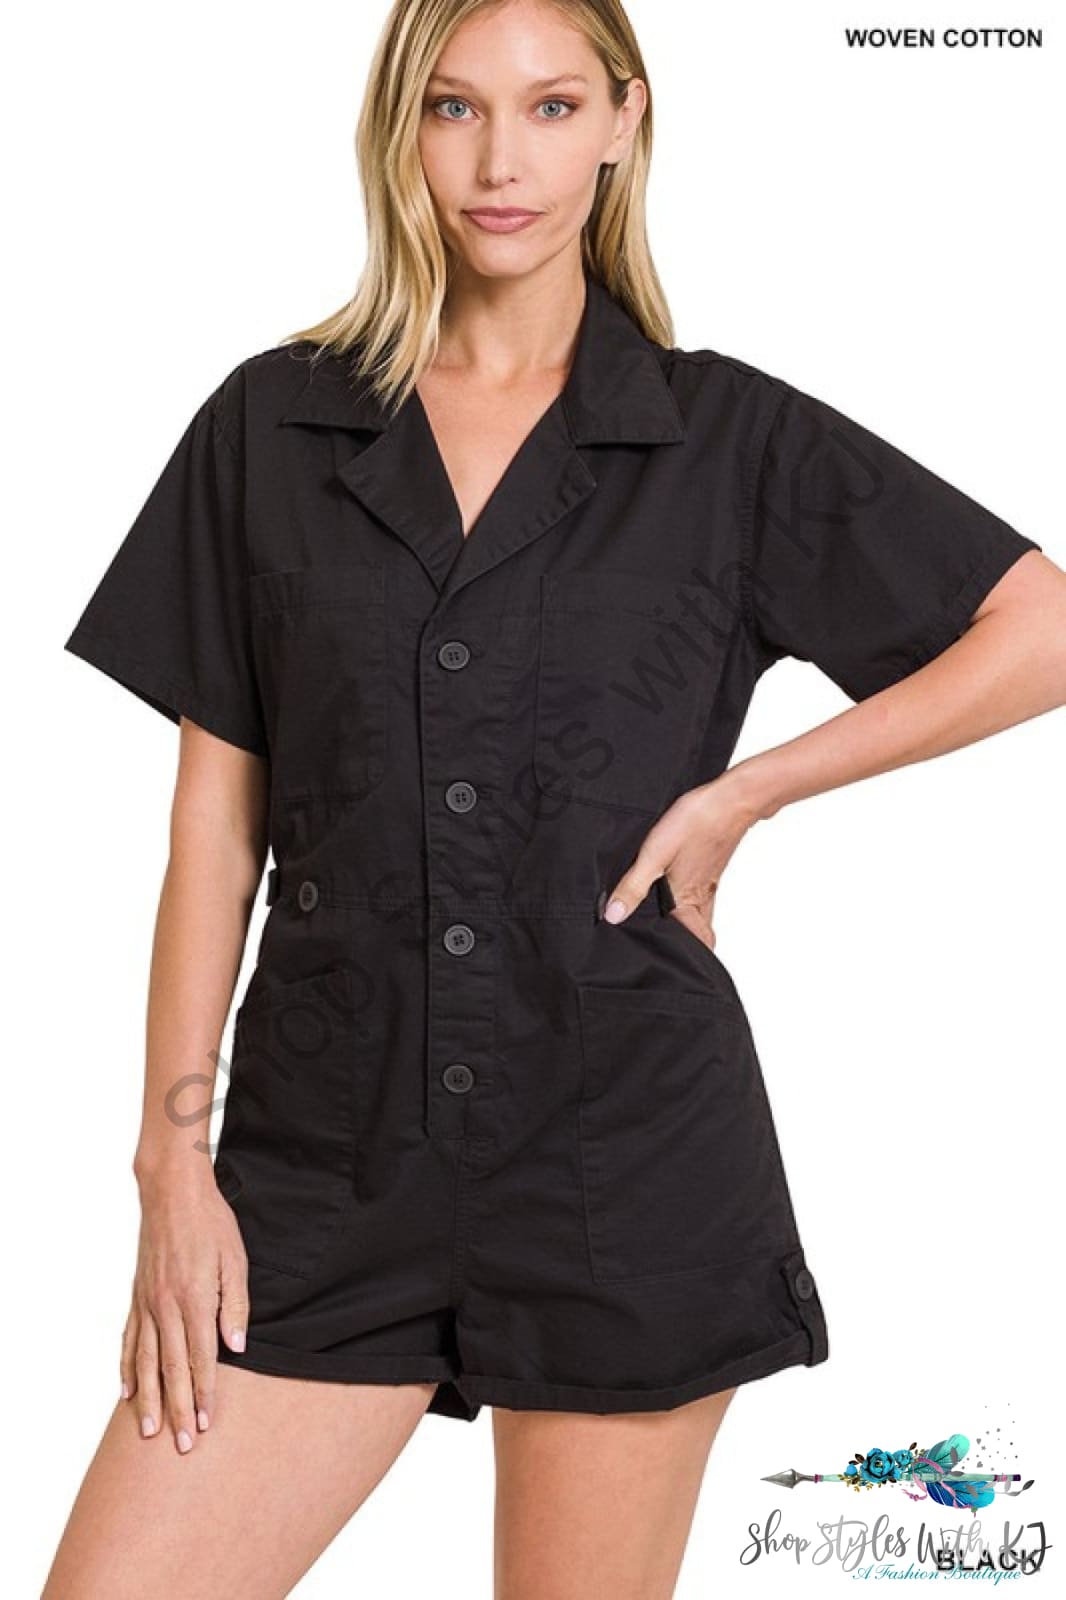 Imani Woven Cotton Button Front Shirt Romper Black / S Rompers